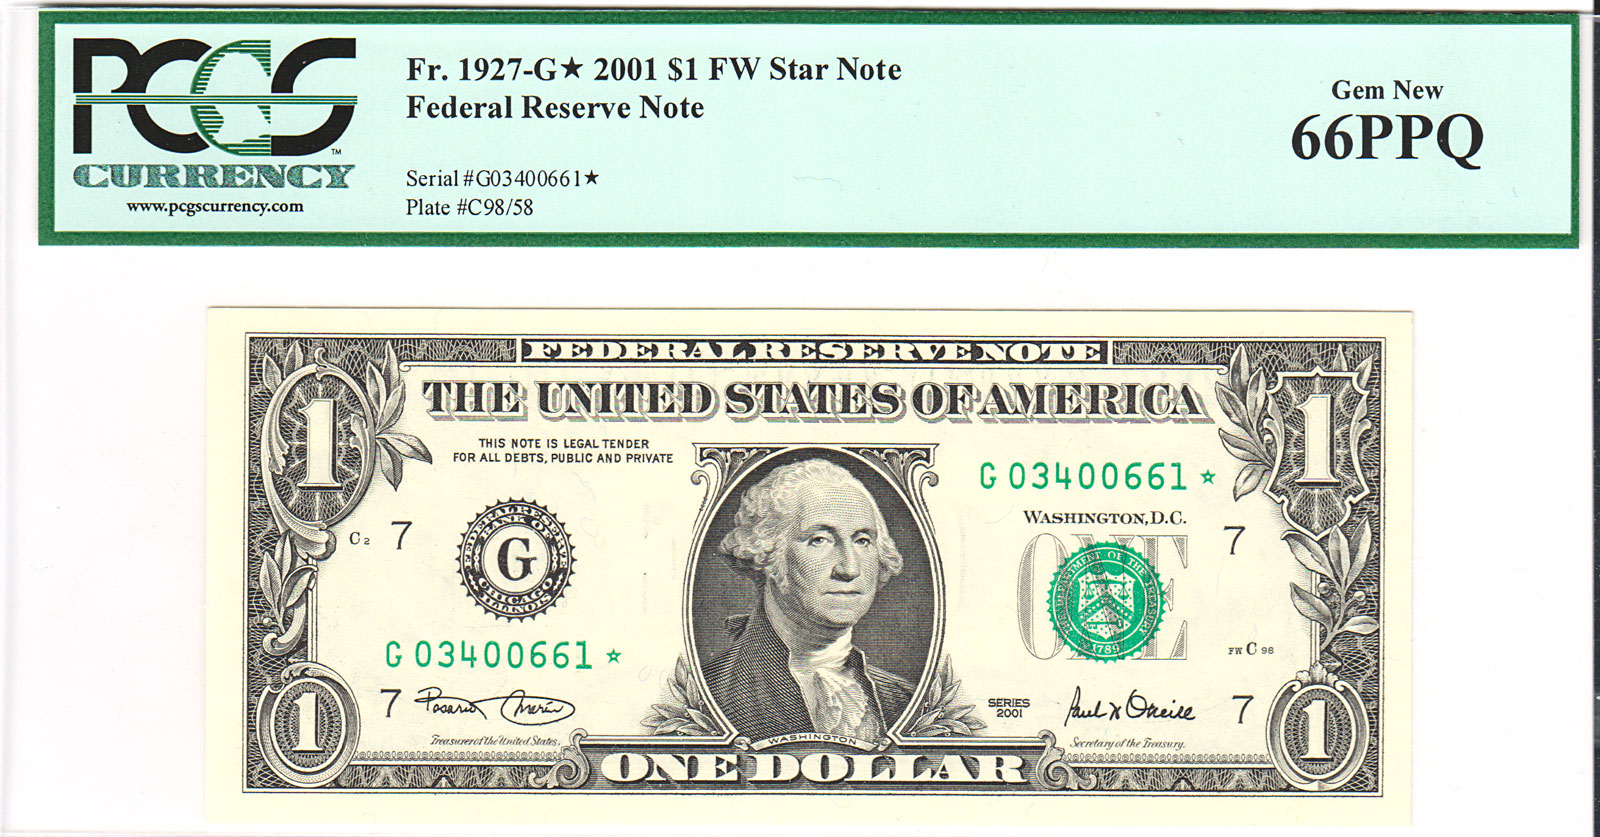 Вес 1 доллара. 1 Доллар. Один доллар. Новая купюра 1 доллар. Один доллар США банкнота.